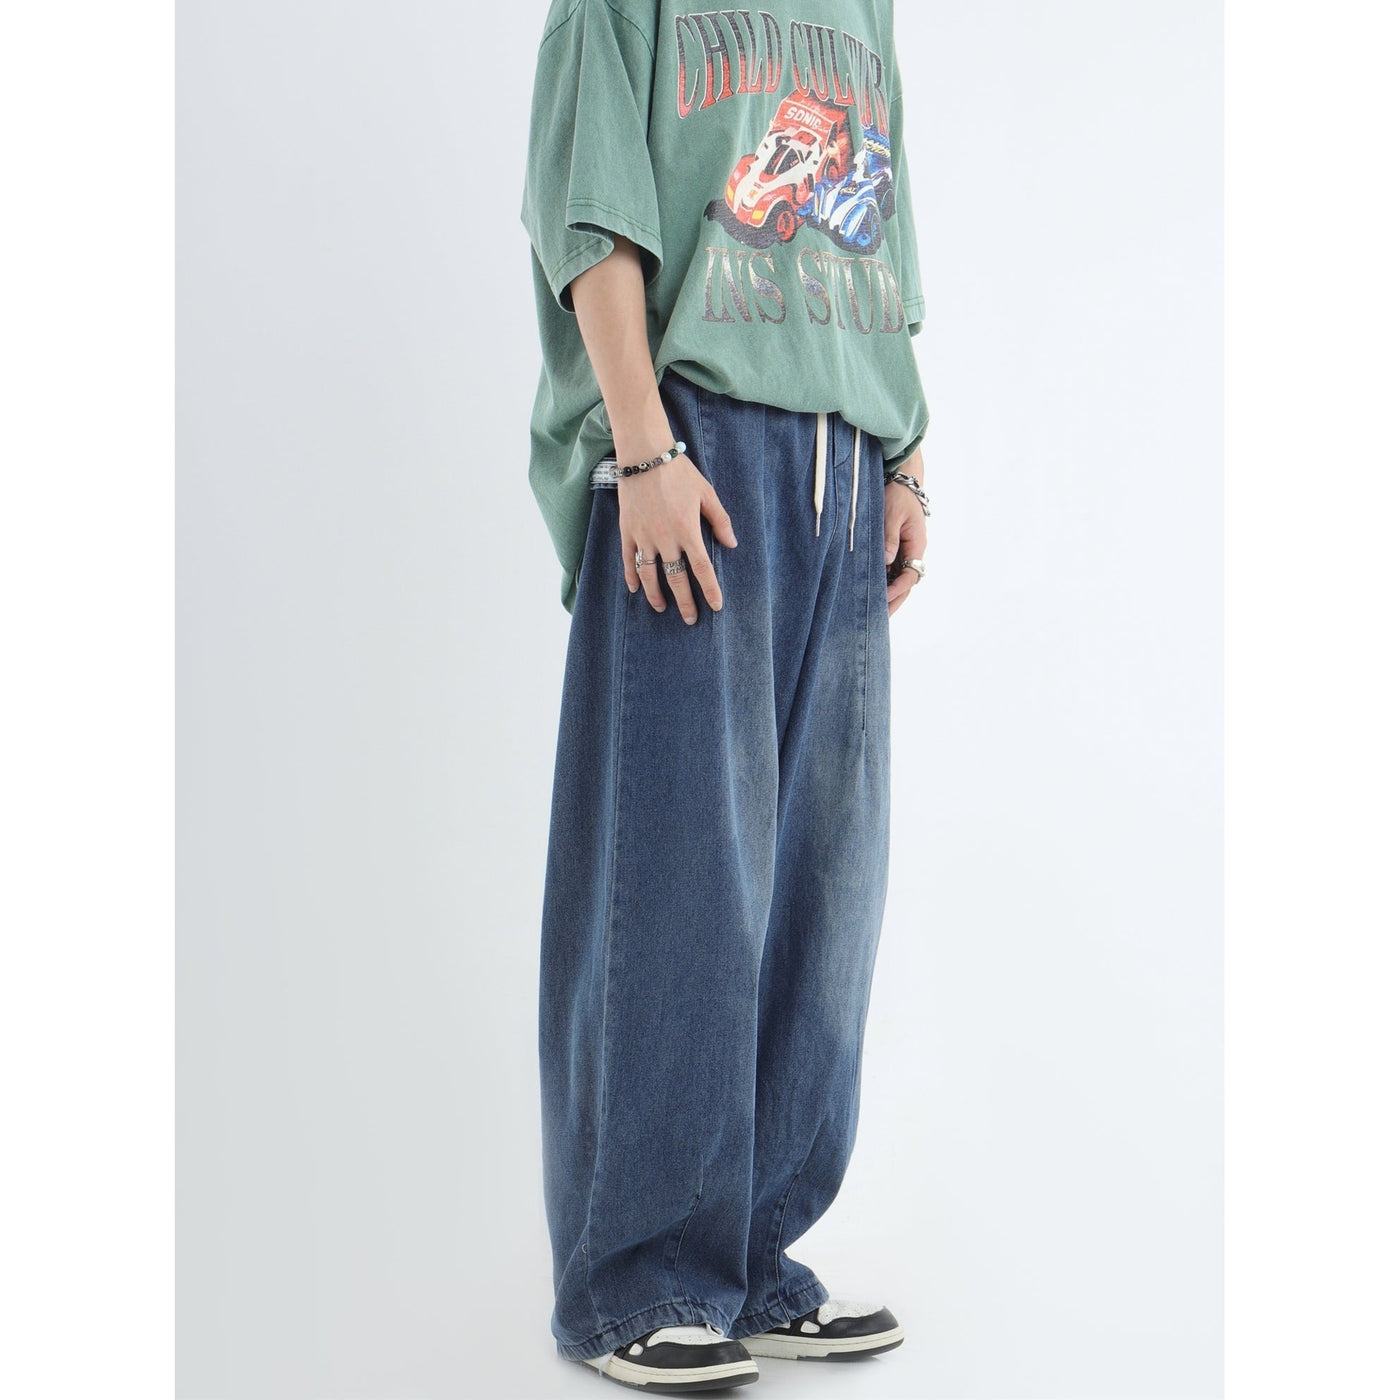 Drawstring Waist Jeans Korean Street Fashion Jeans By INS Korea Shop Online at OH Vault